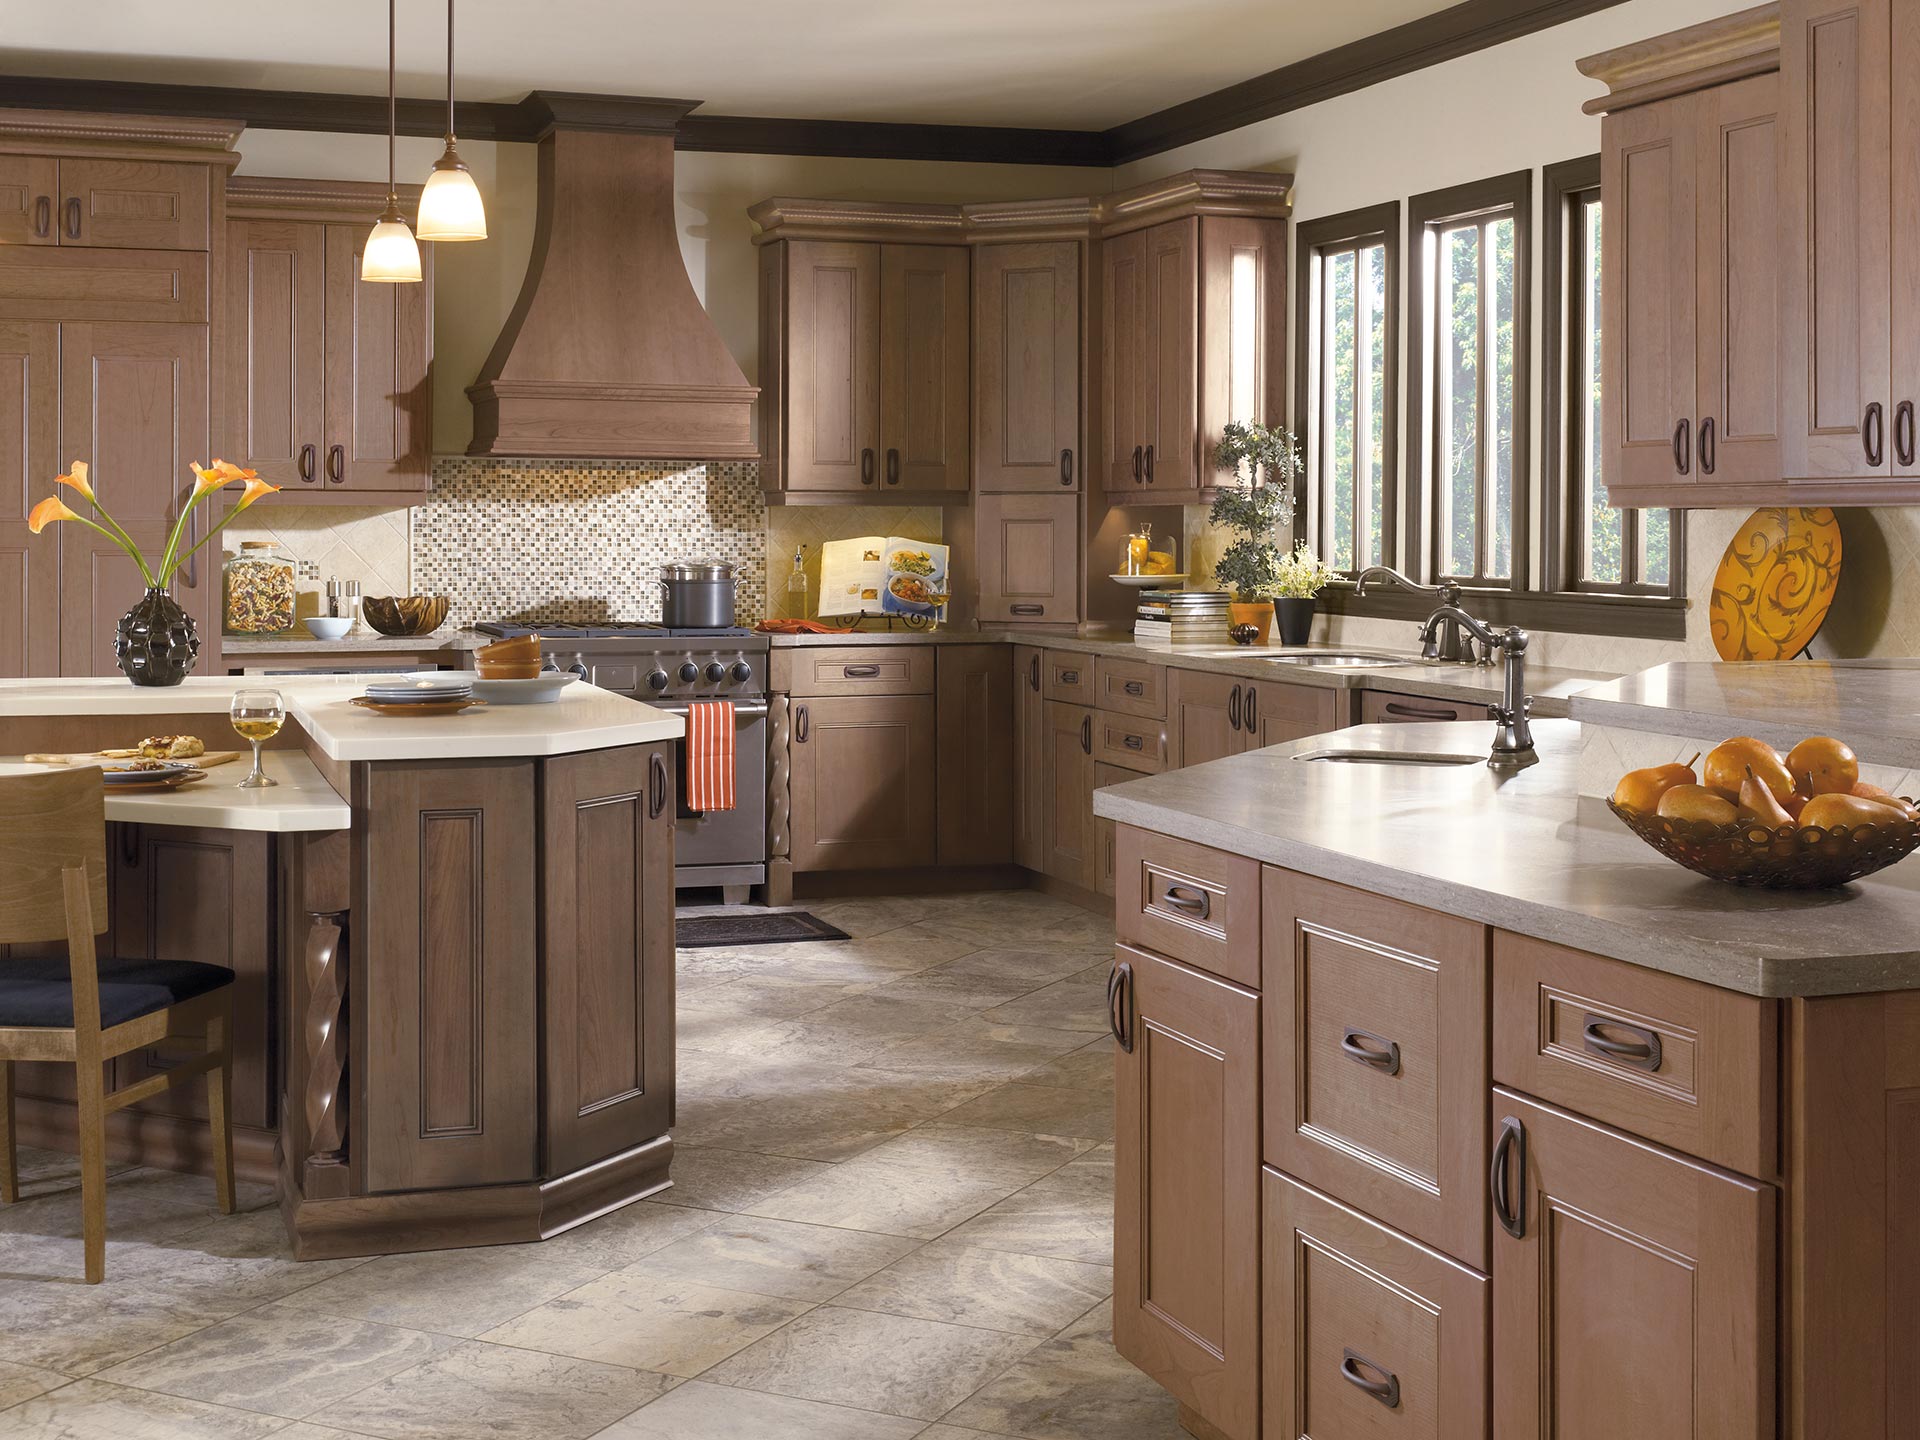 http://distinctivekitchens.com/wp-content/uploads/2020/10/O33-transitional-brown-woodgrain-kitchen-cabinets-omega-distinctive-kitchens.jpg